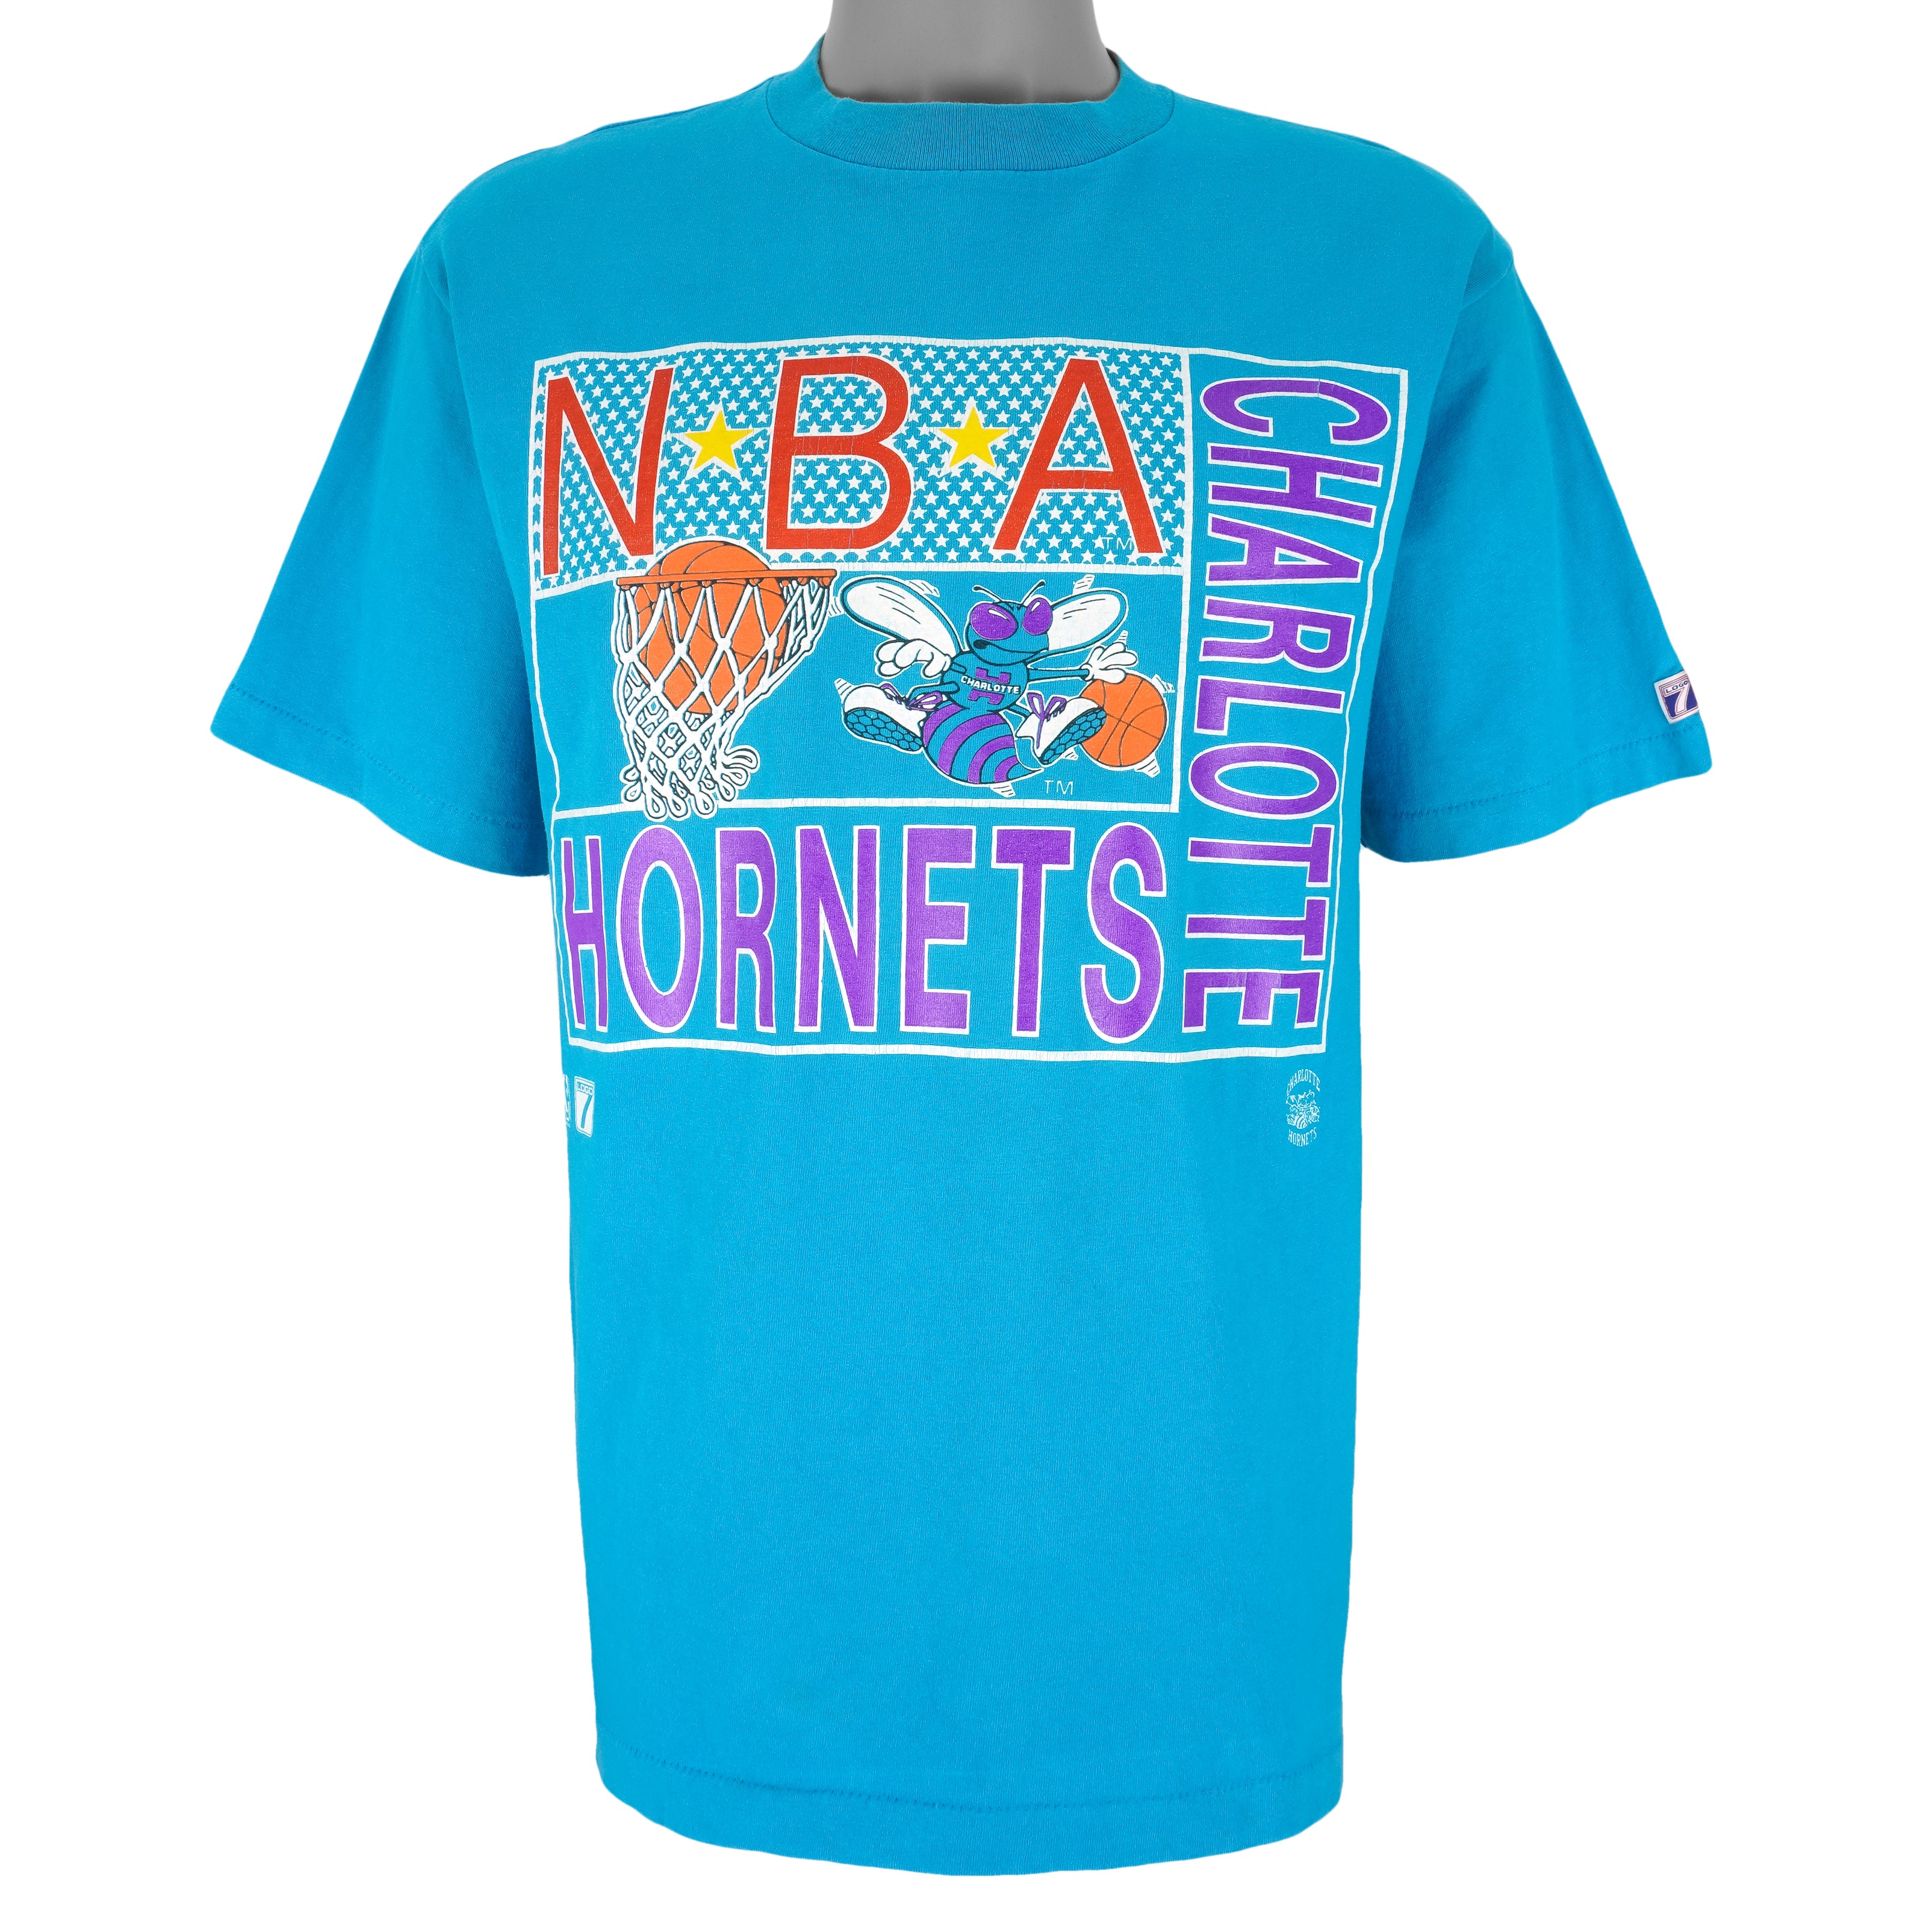 Charlotte Hornets Vintage Big Logo T-Shirt Unisex